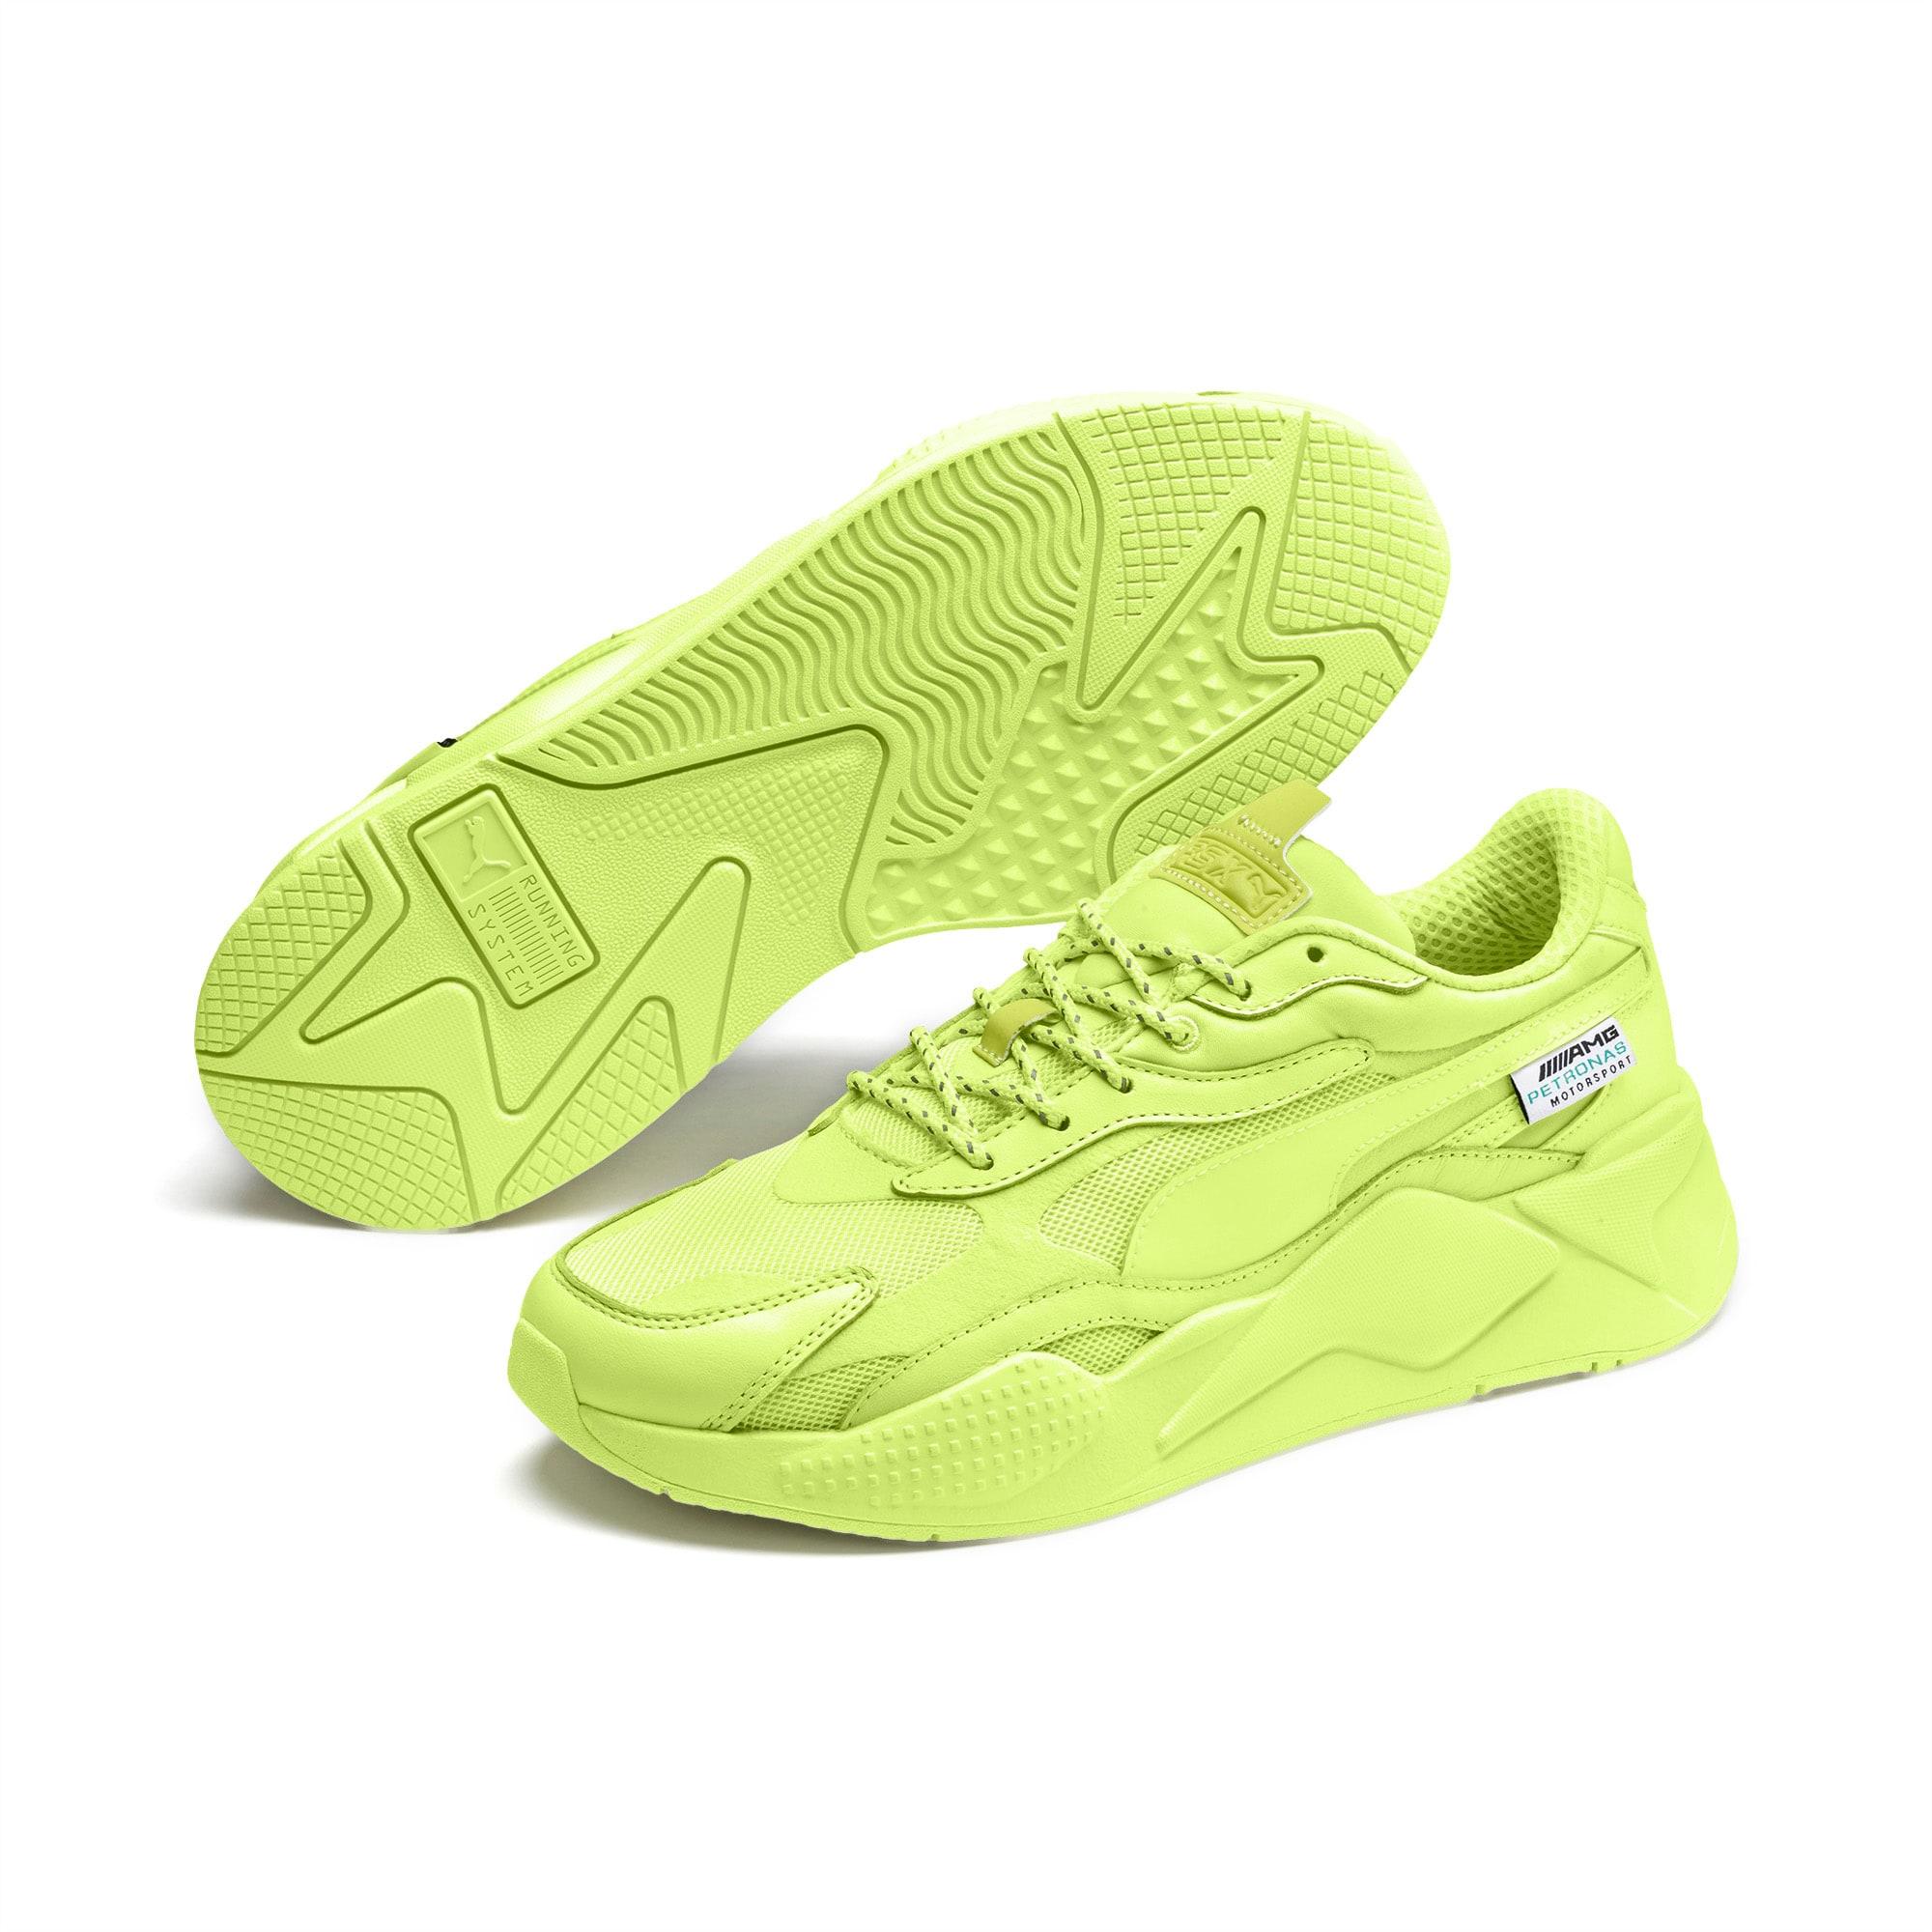 neon green puma sneakers Off 57% - sirinscrochet.com